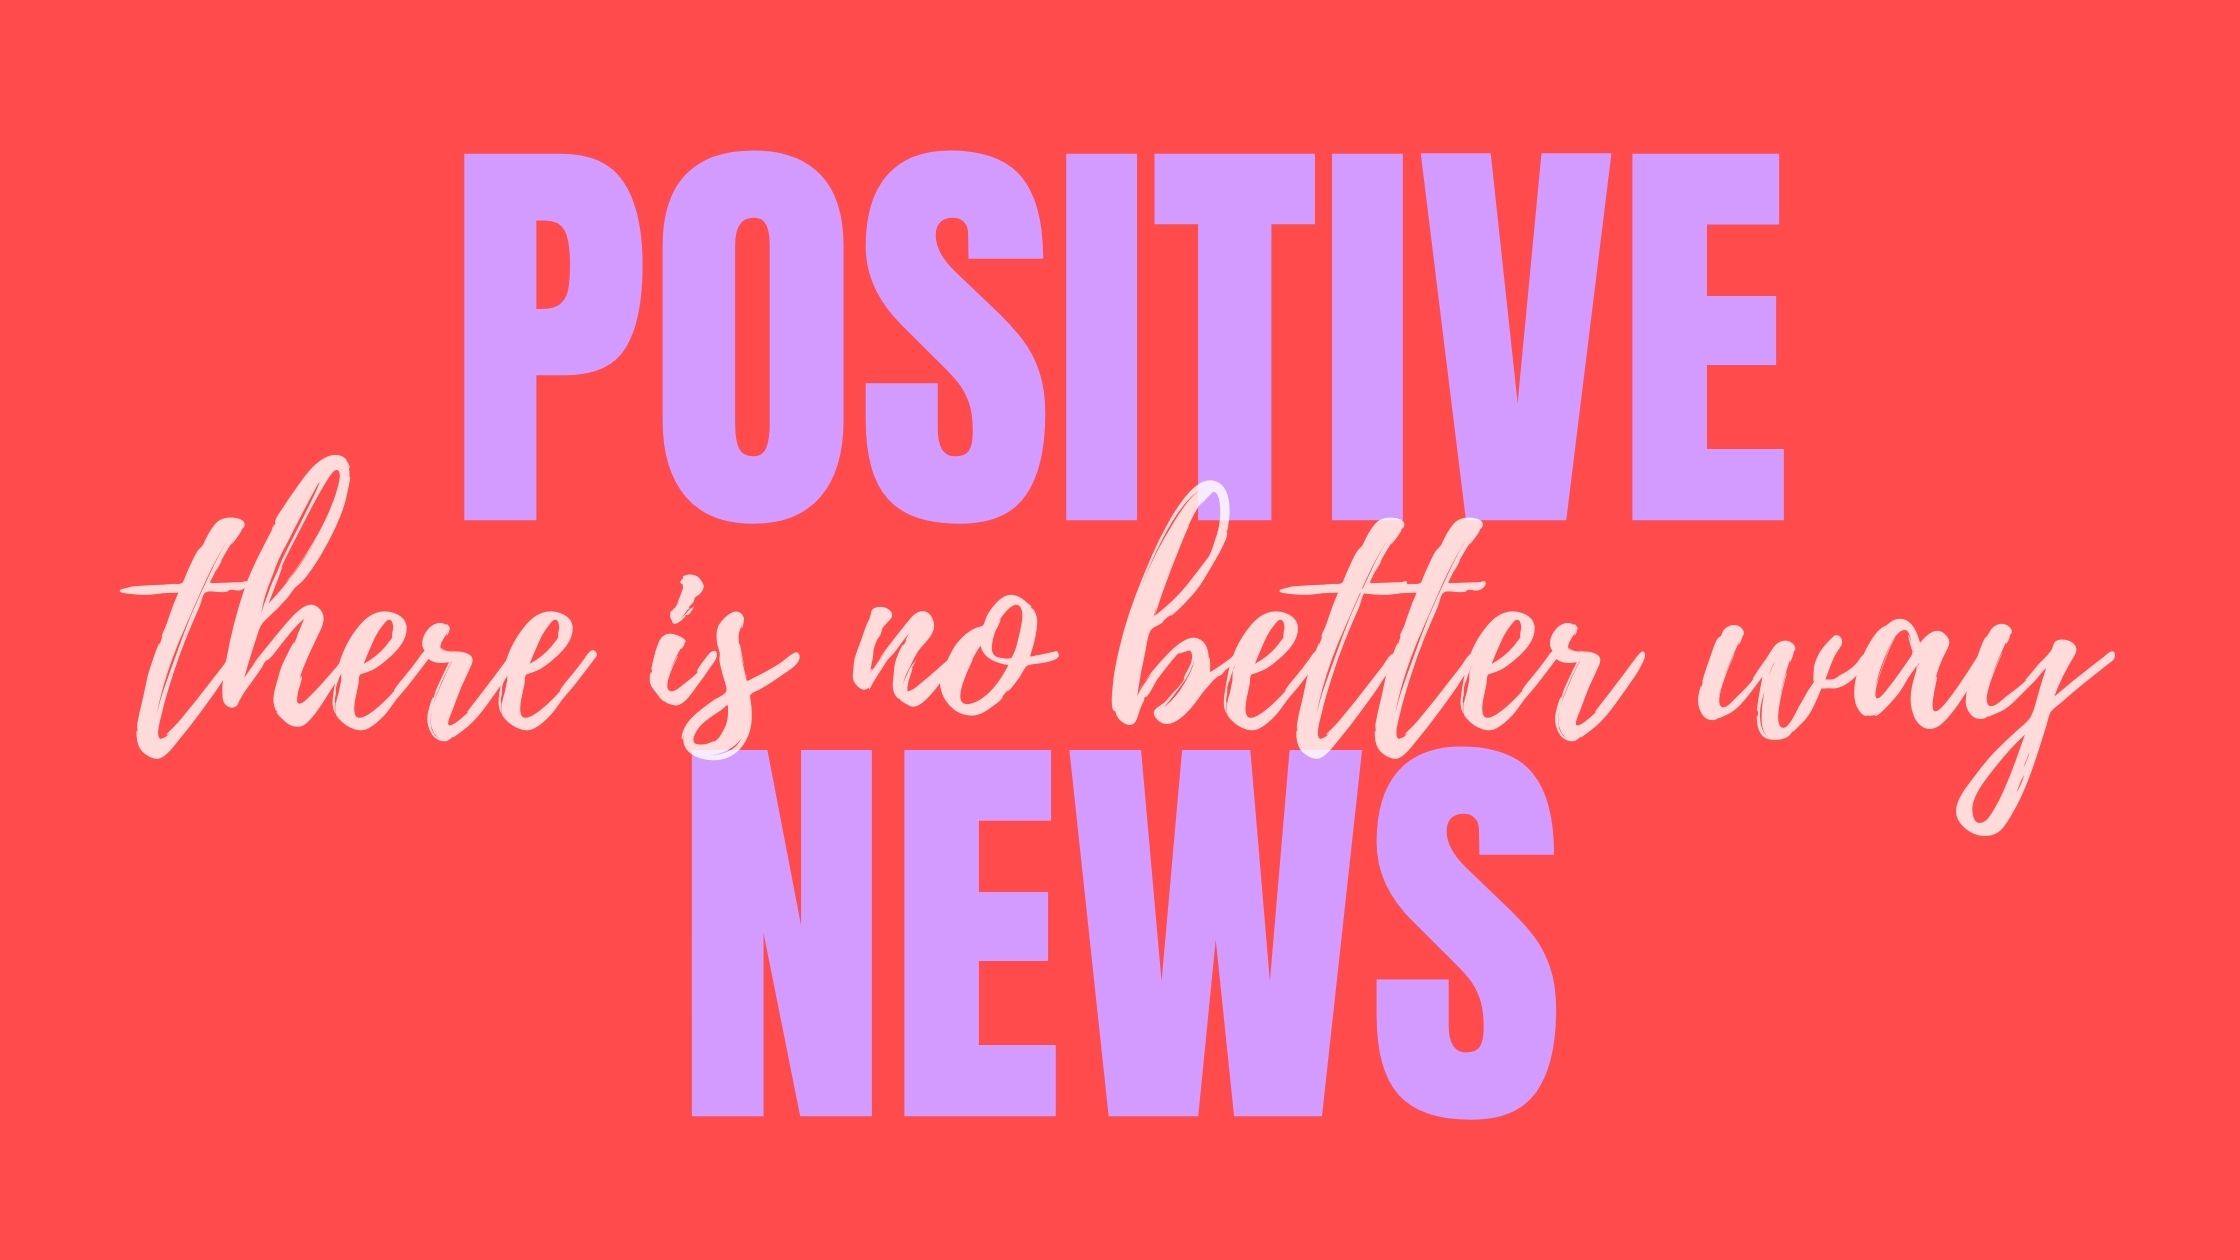 Positive News